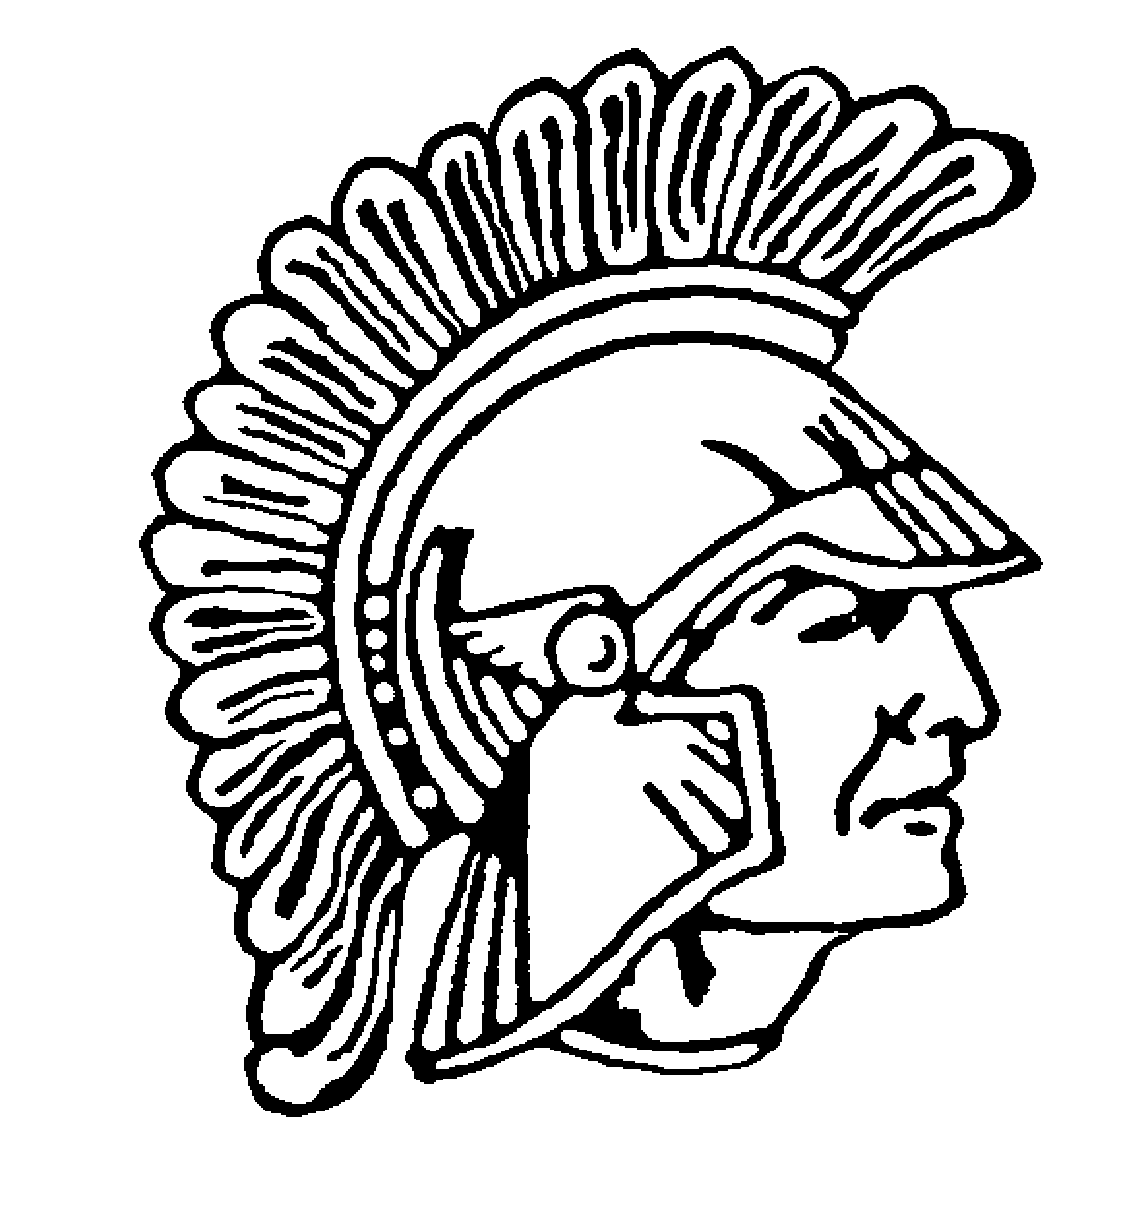 Spartan Head Logo - Free Spartan Head, Download Free Clip Art, Free Clip Art on Clipart ...